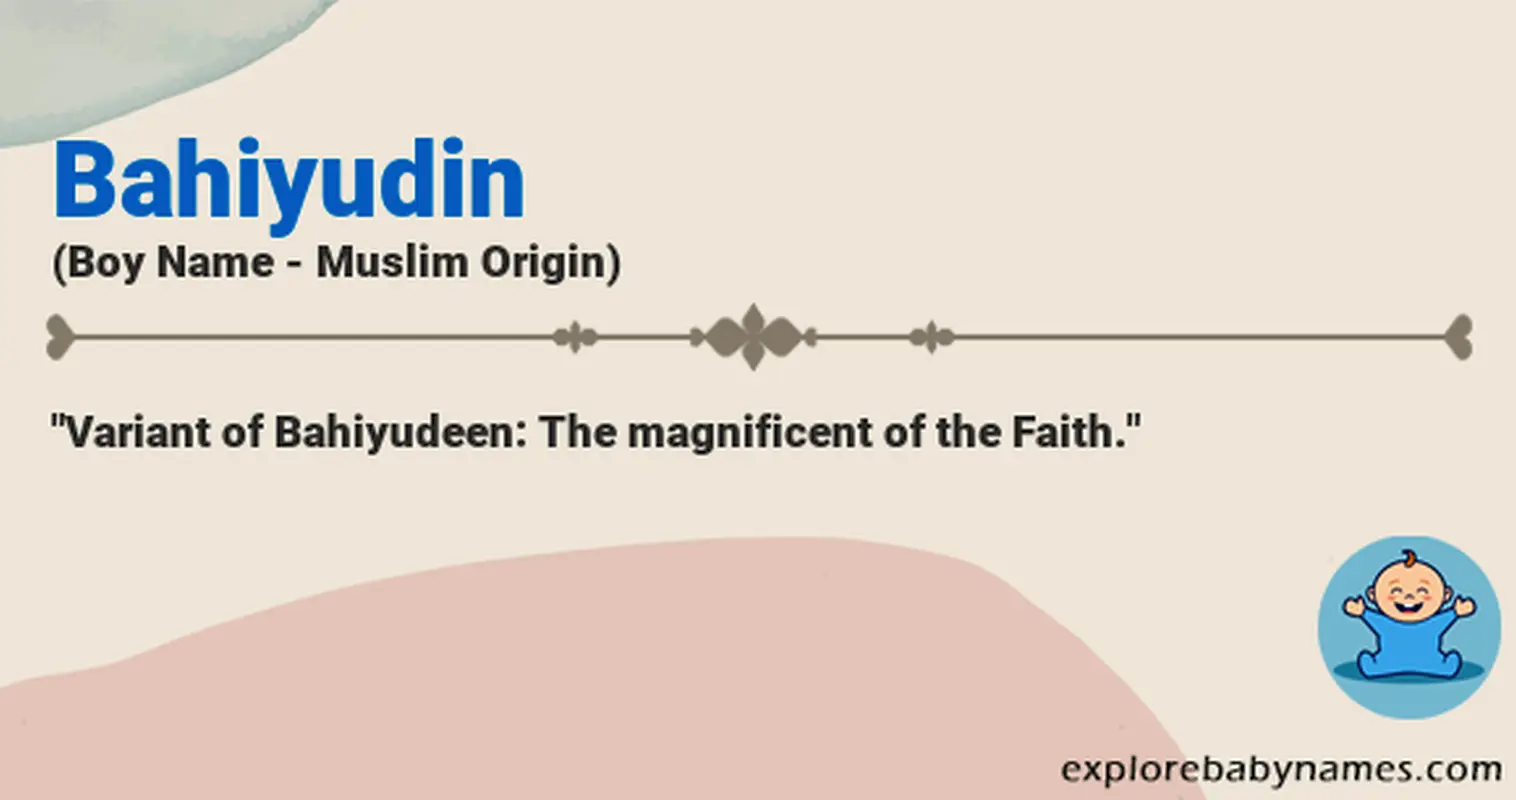 Meaning of Bahiyudin